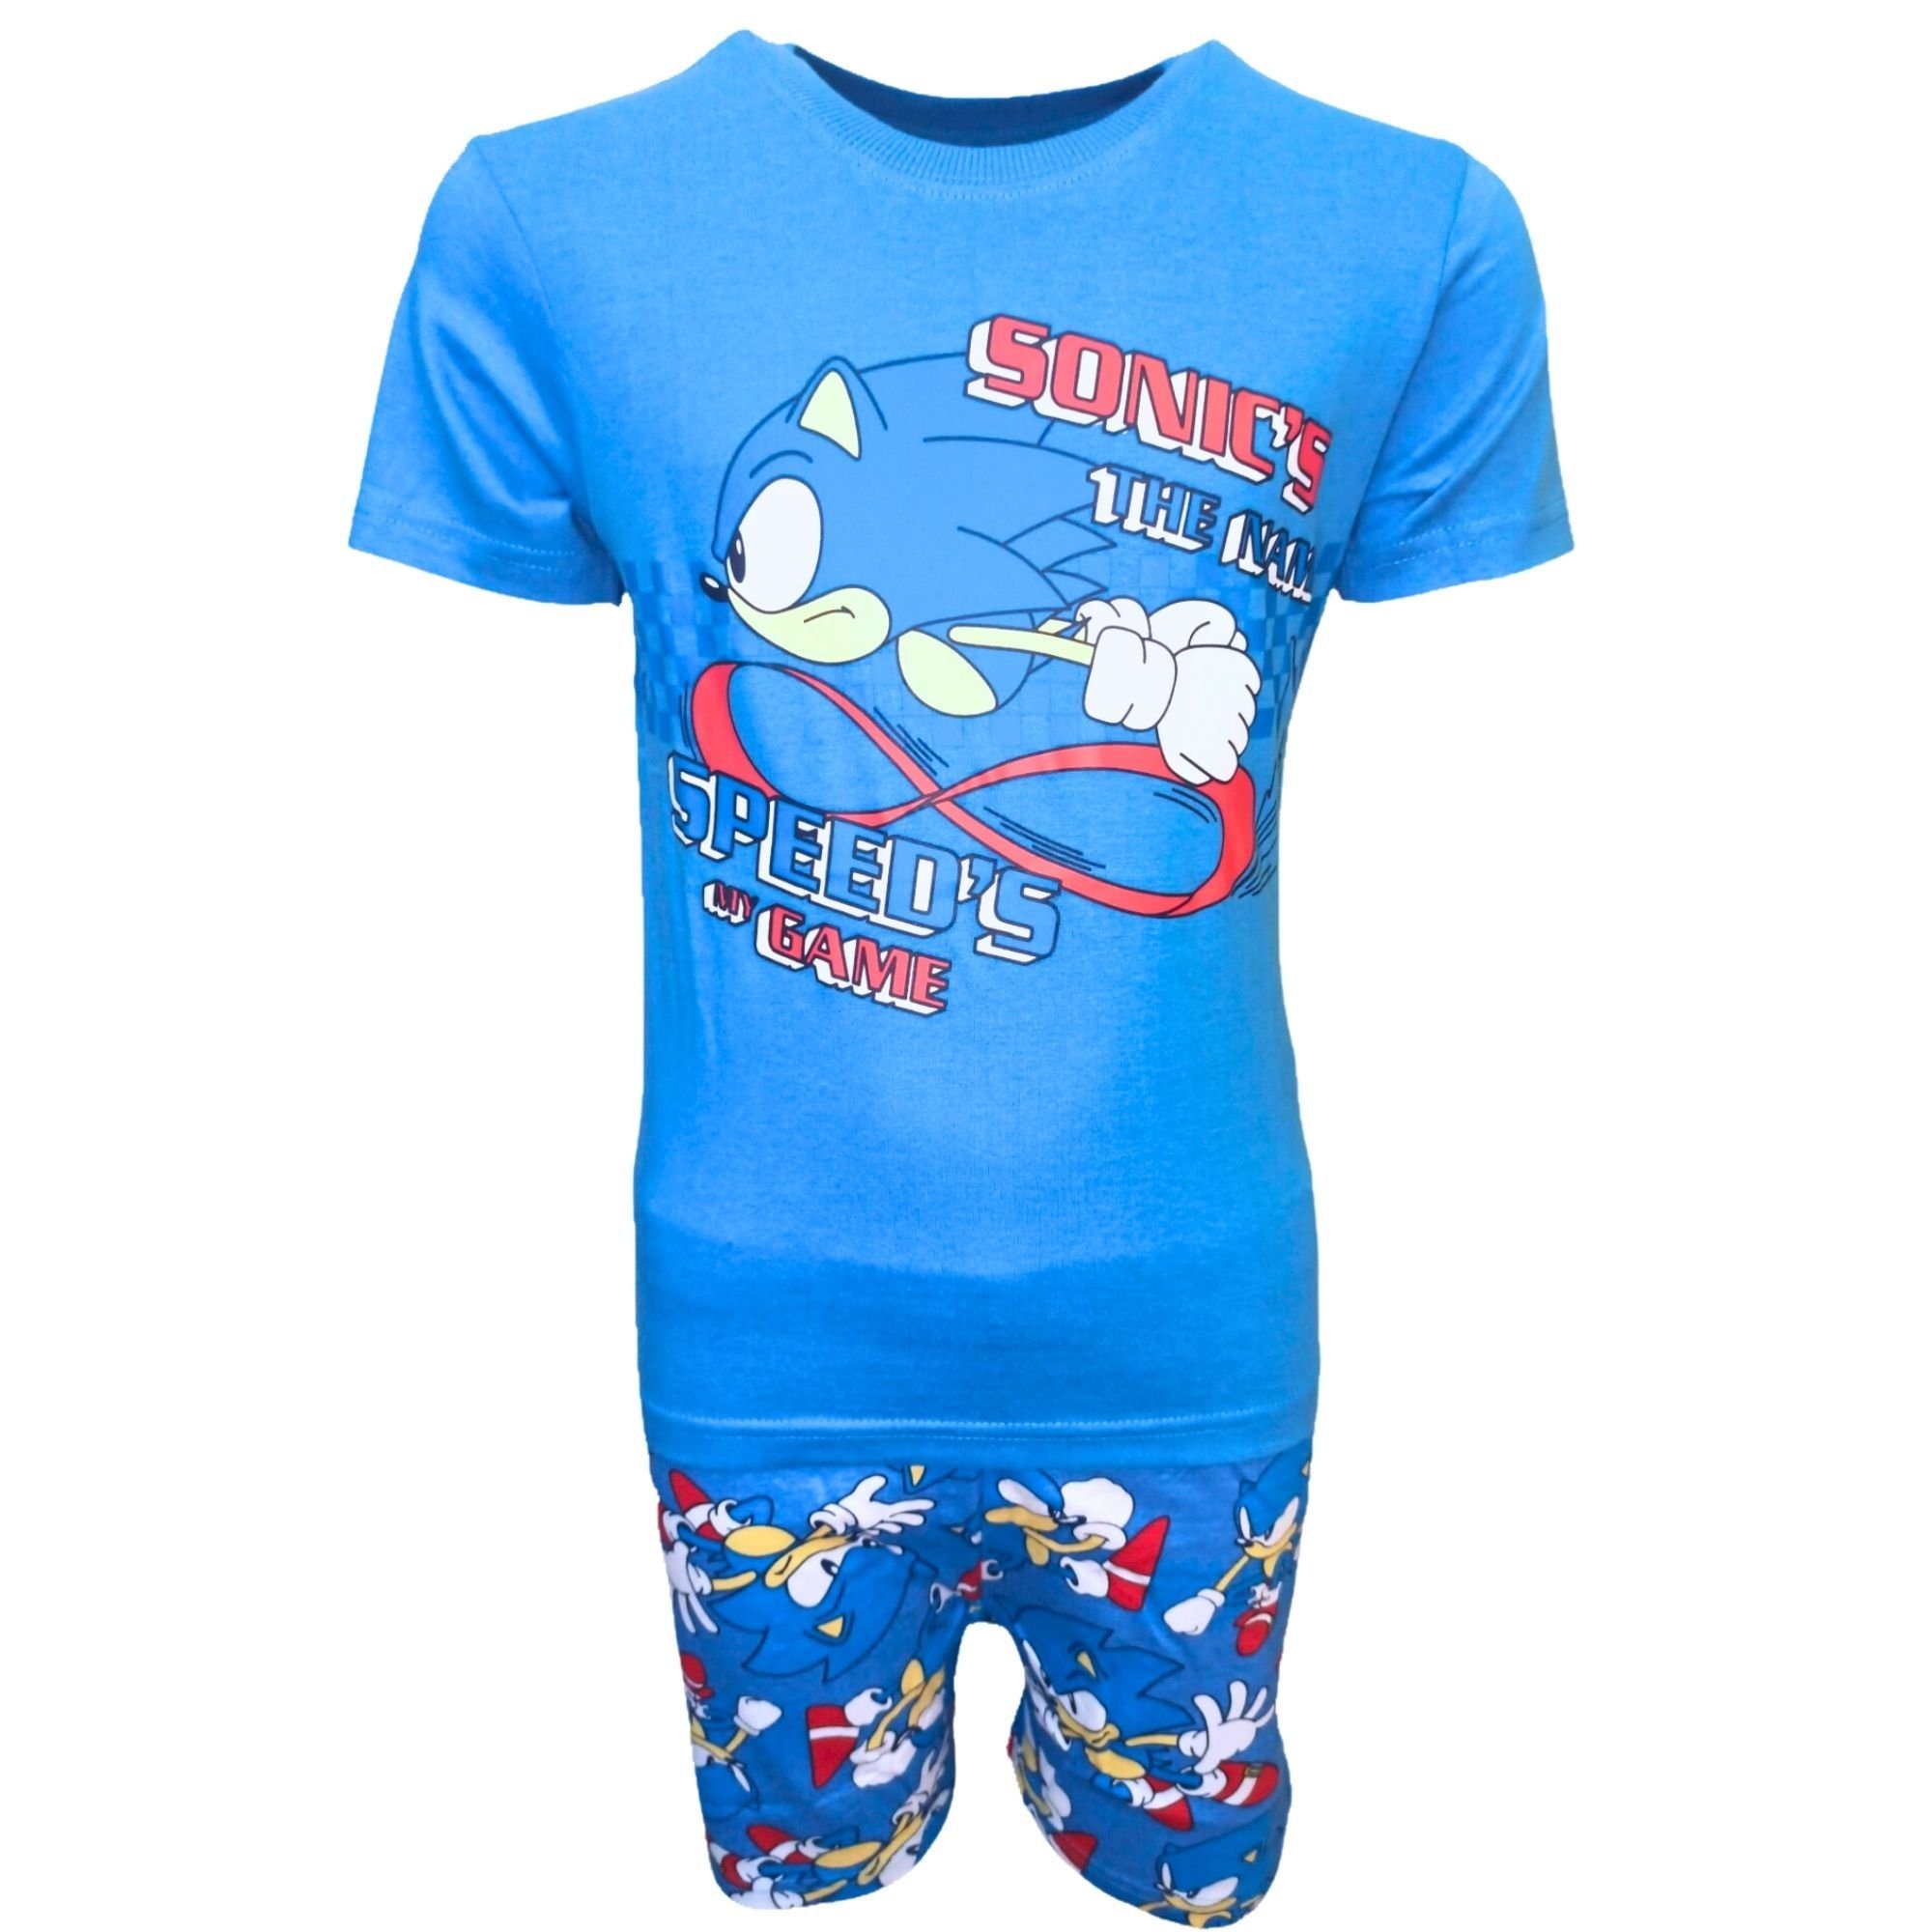 Sonic The Hedgehog Schlafanzug SPEED´S GAME (2 tlg) Jungen Pyjama Set kurz - Shorty Gr. 98-128 cm